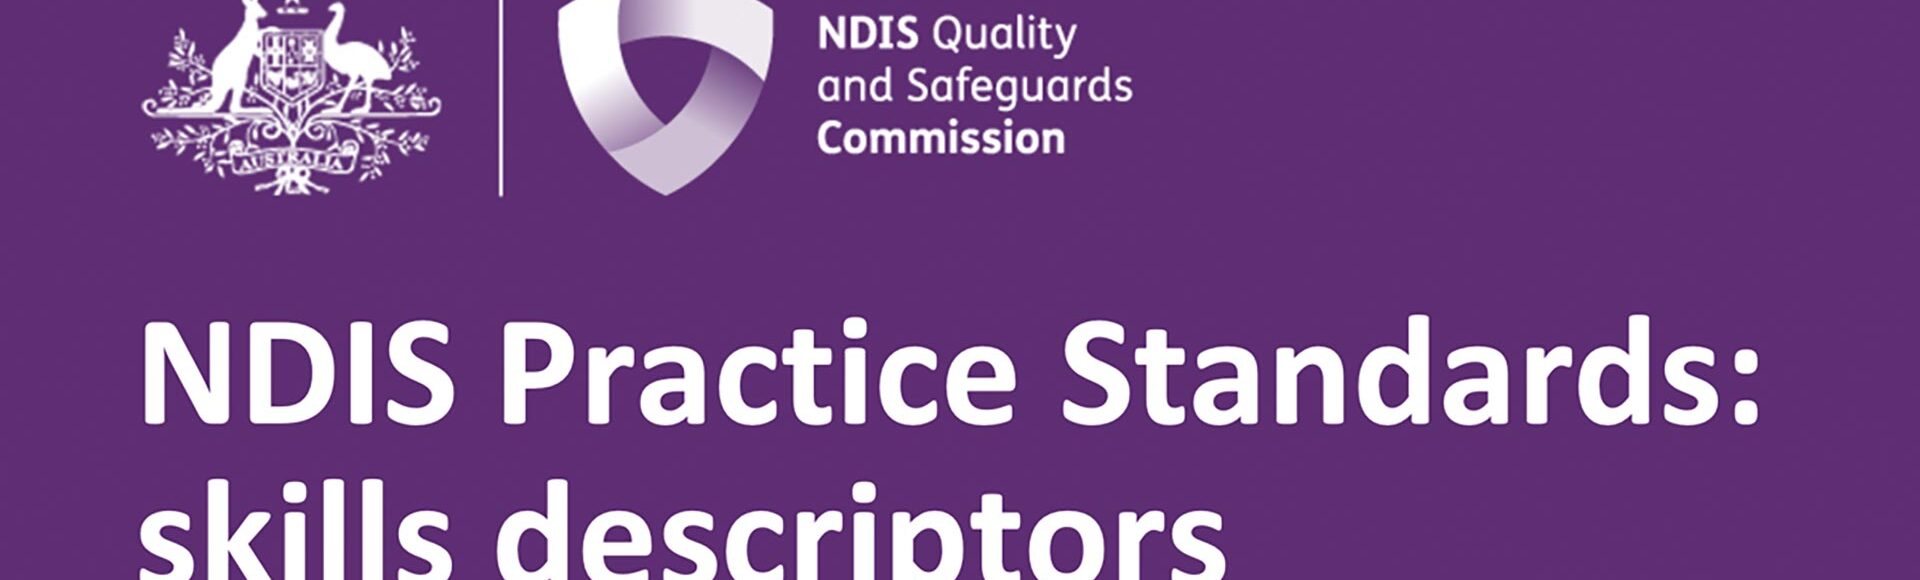 Premium Health - Article - NDIS High Intensity Support Skills Descriptors